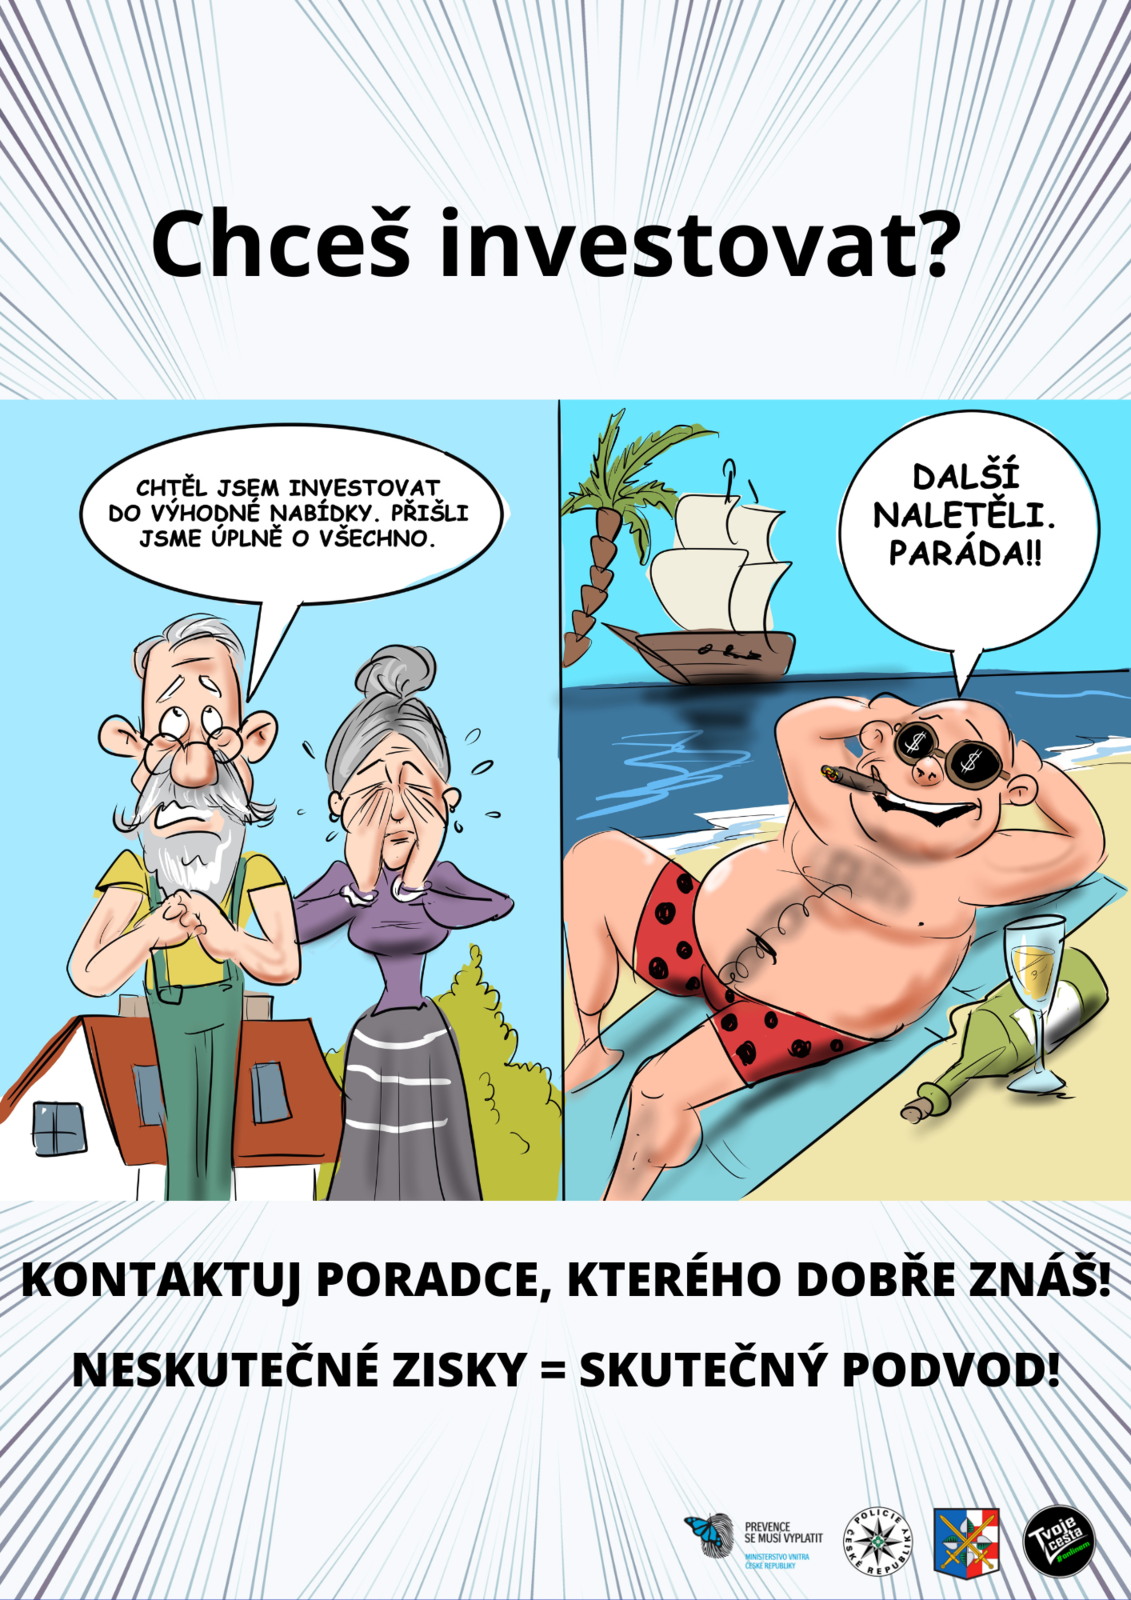 Šablona_-_Prokoukl_-_Investice.png